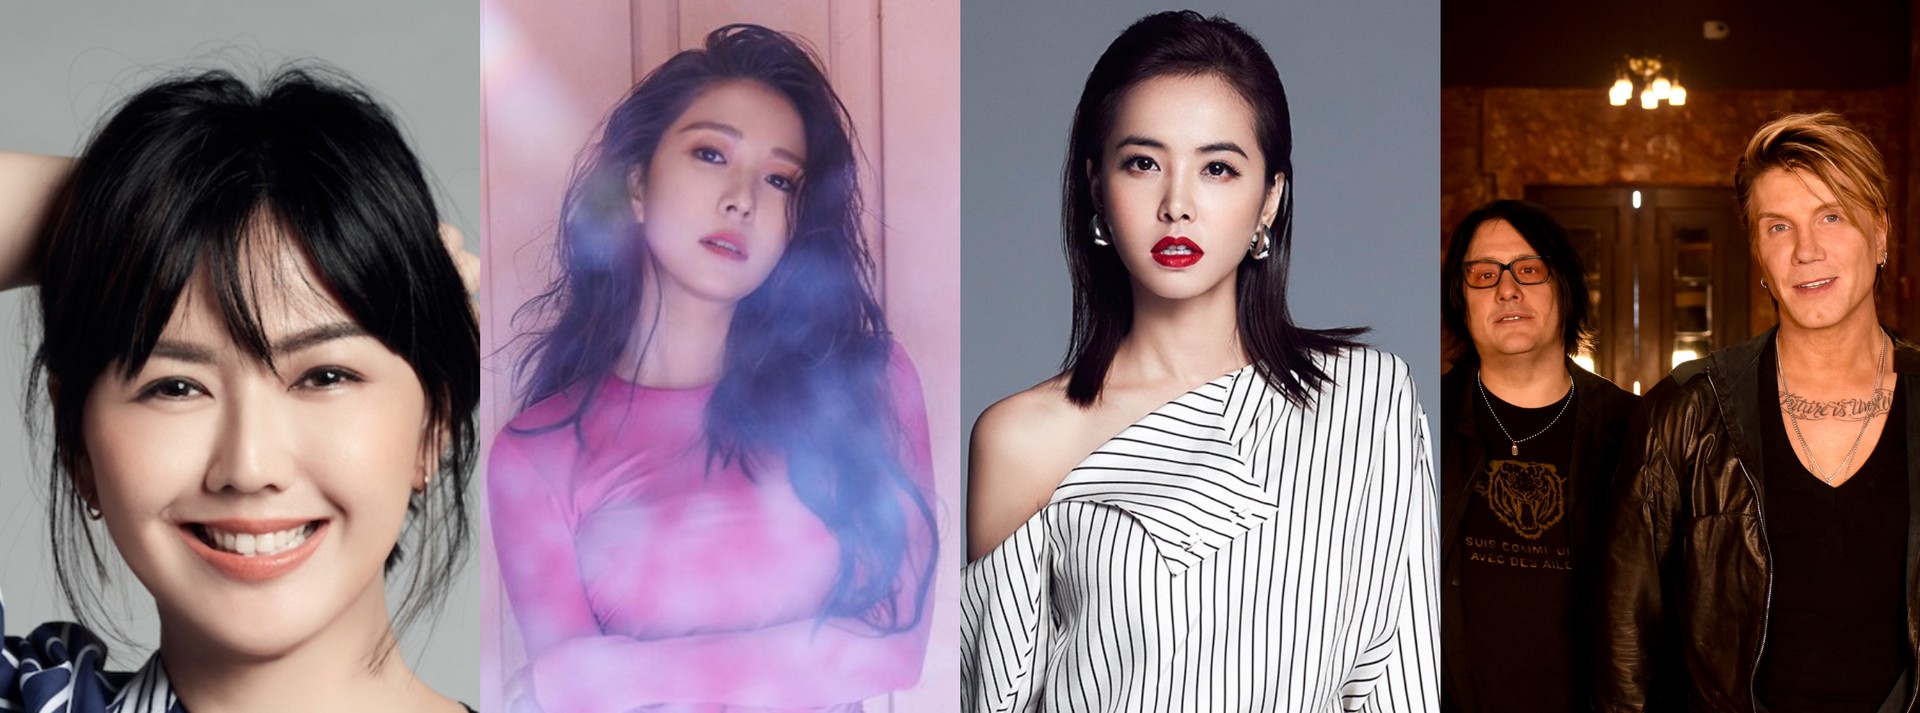 One Love Asia Festival announces debut line-up – Jolin Tsai, BoA, Stefanie Sun, Goo Goo Dolls and more to perform 